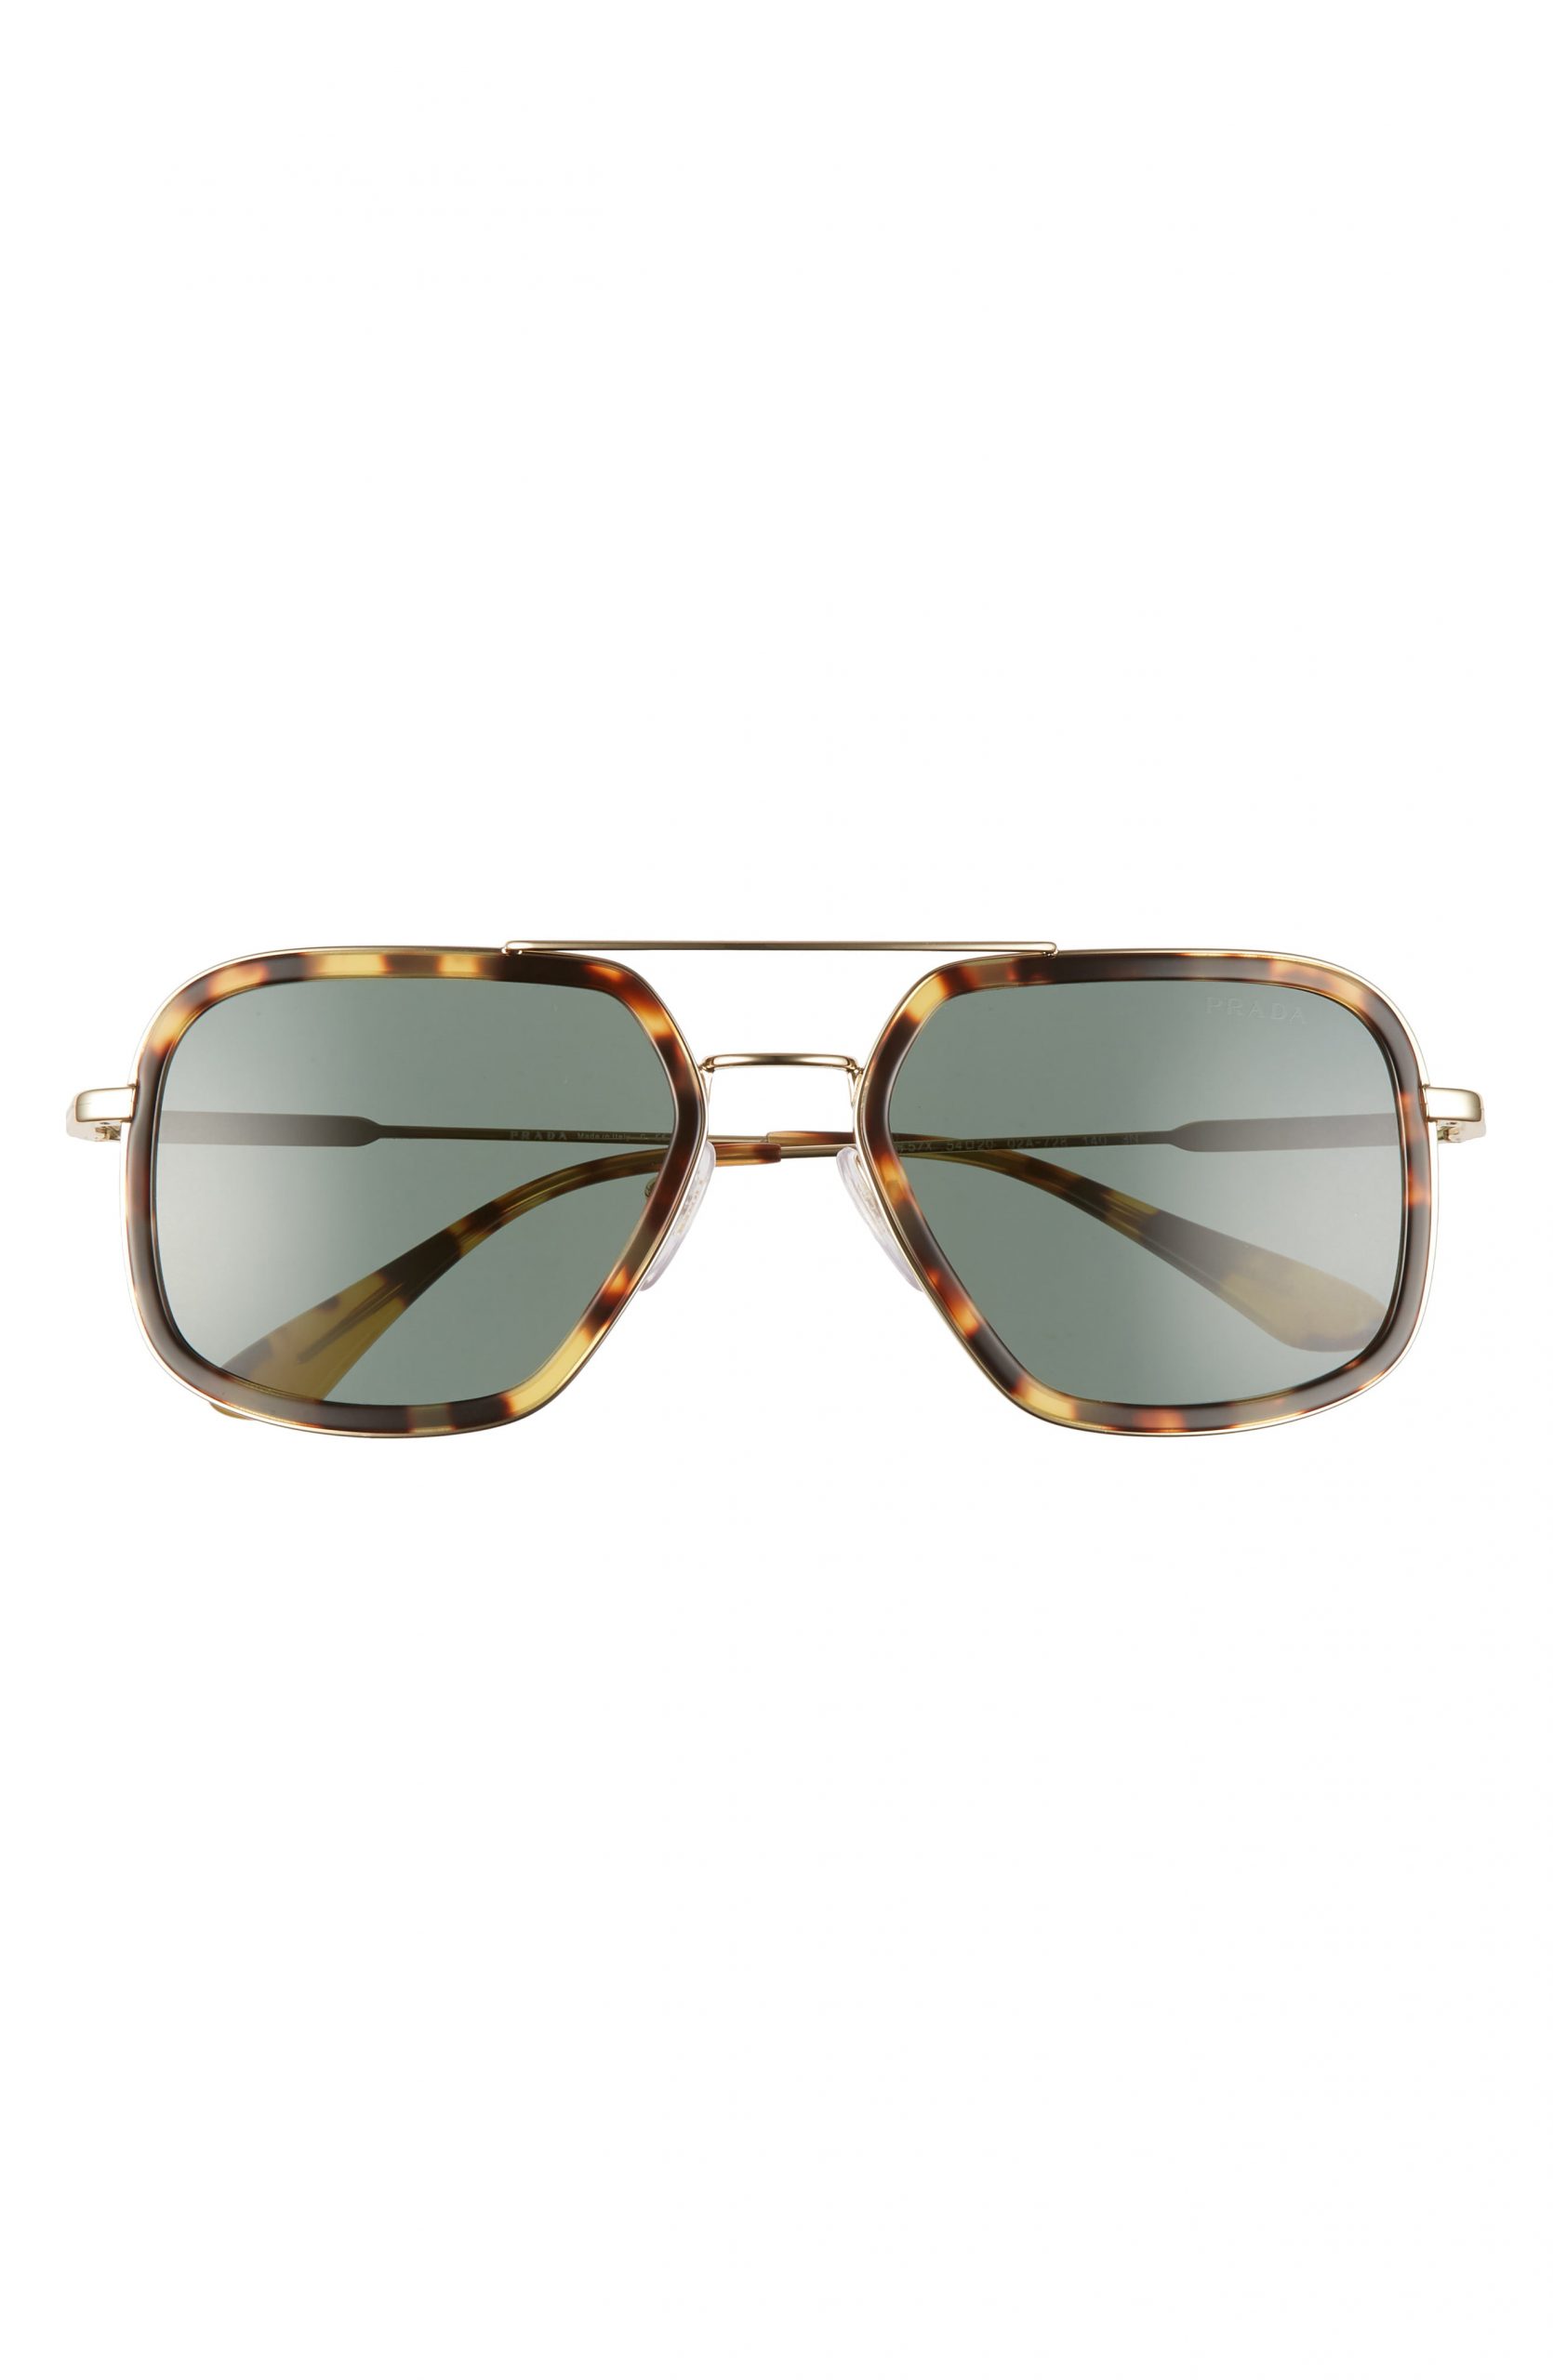 Men’s Prada 54Mm Square Aviator Sunglasses - Brown/ Green Solid | The ...